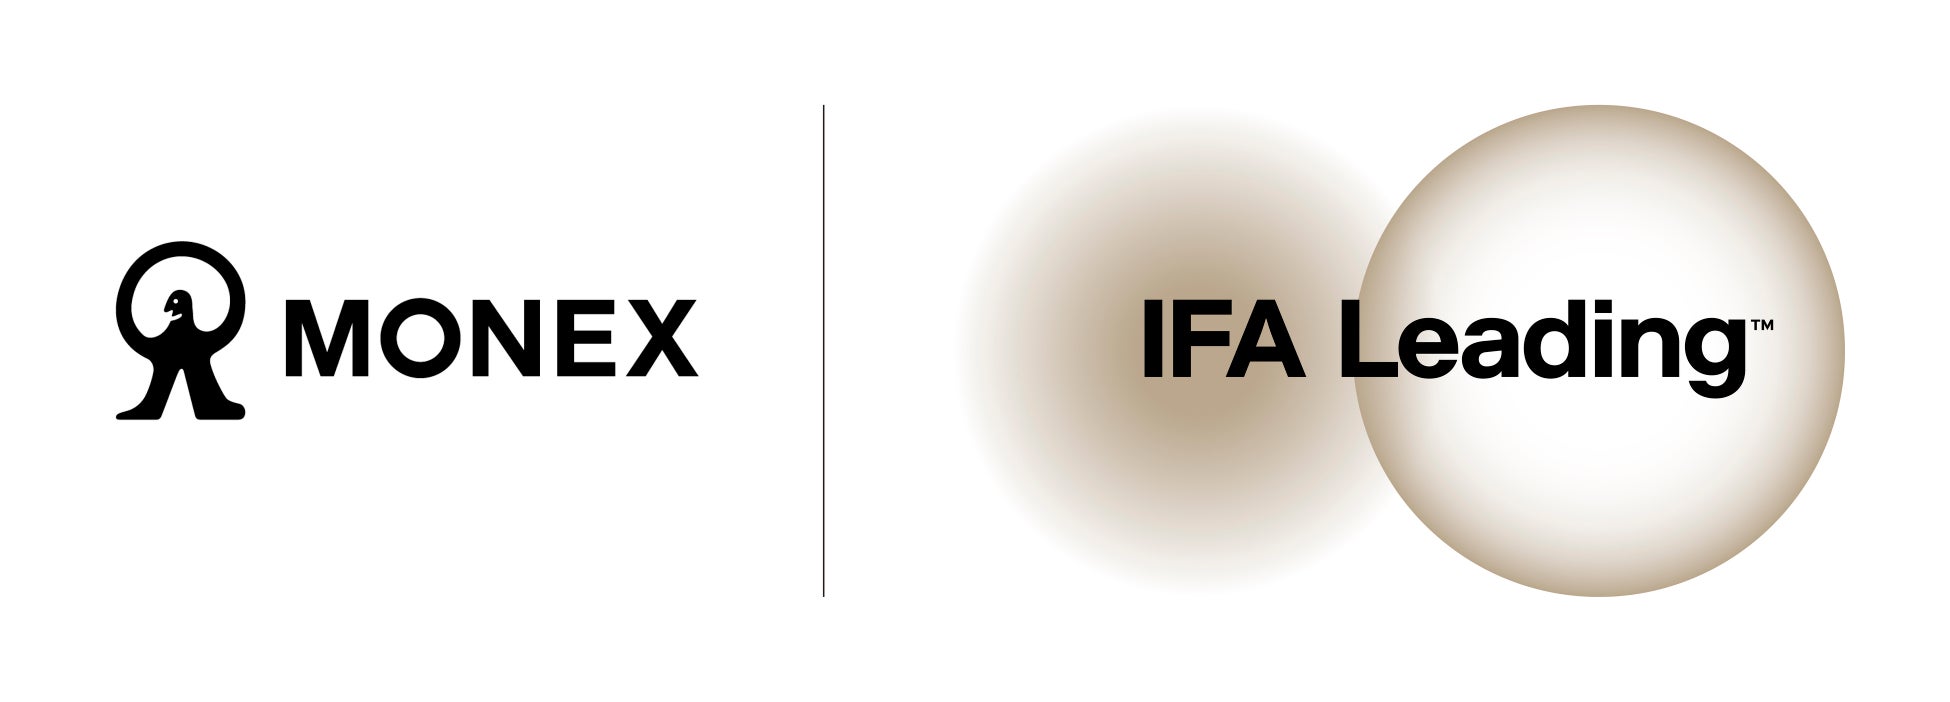 IFA Leadingがマネックス証券と業務提携